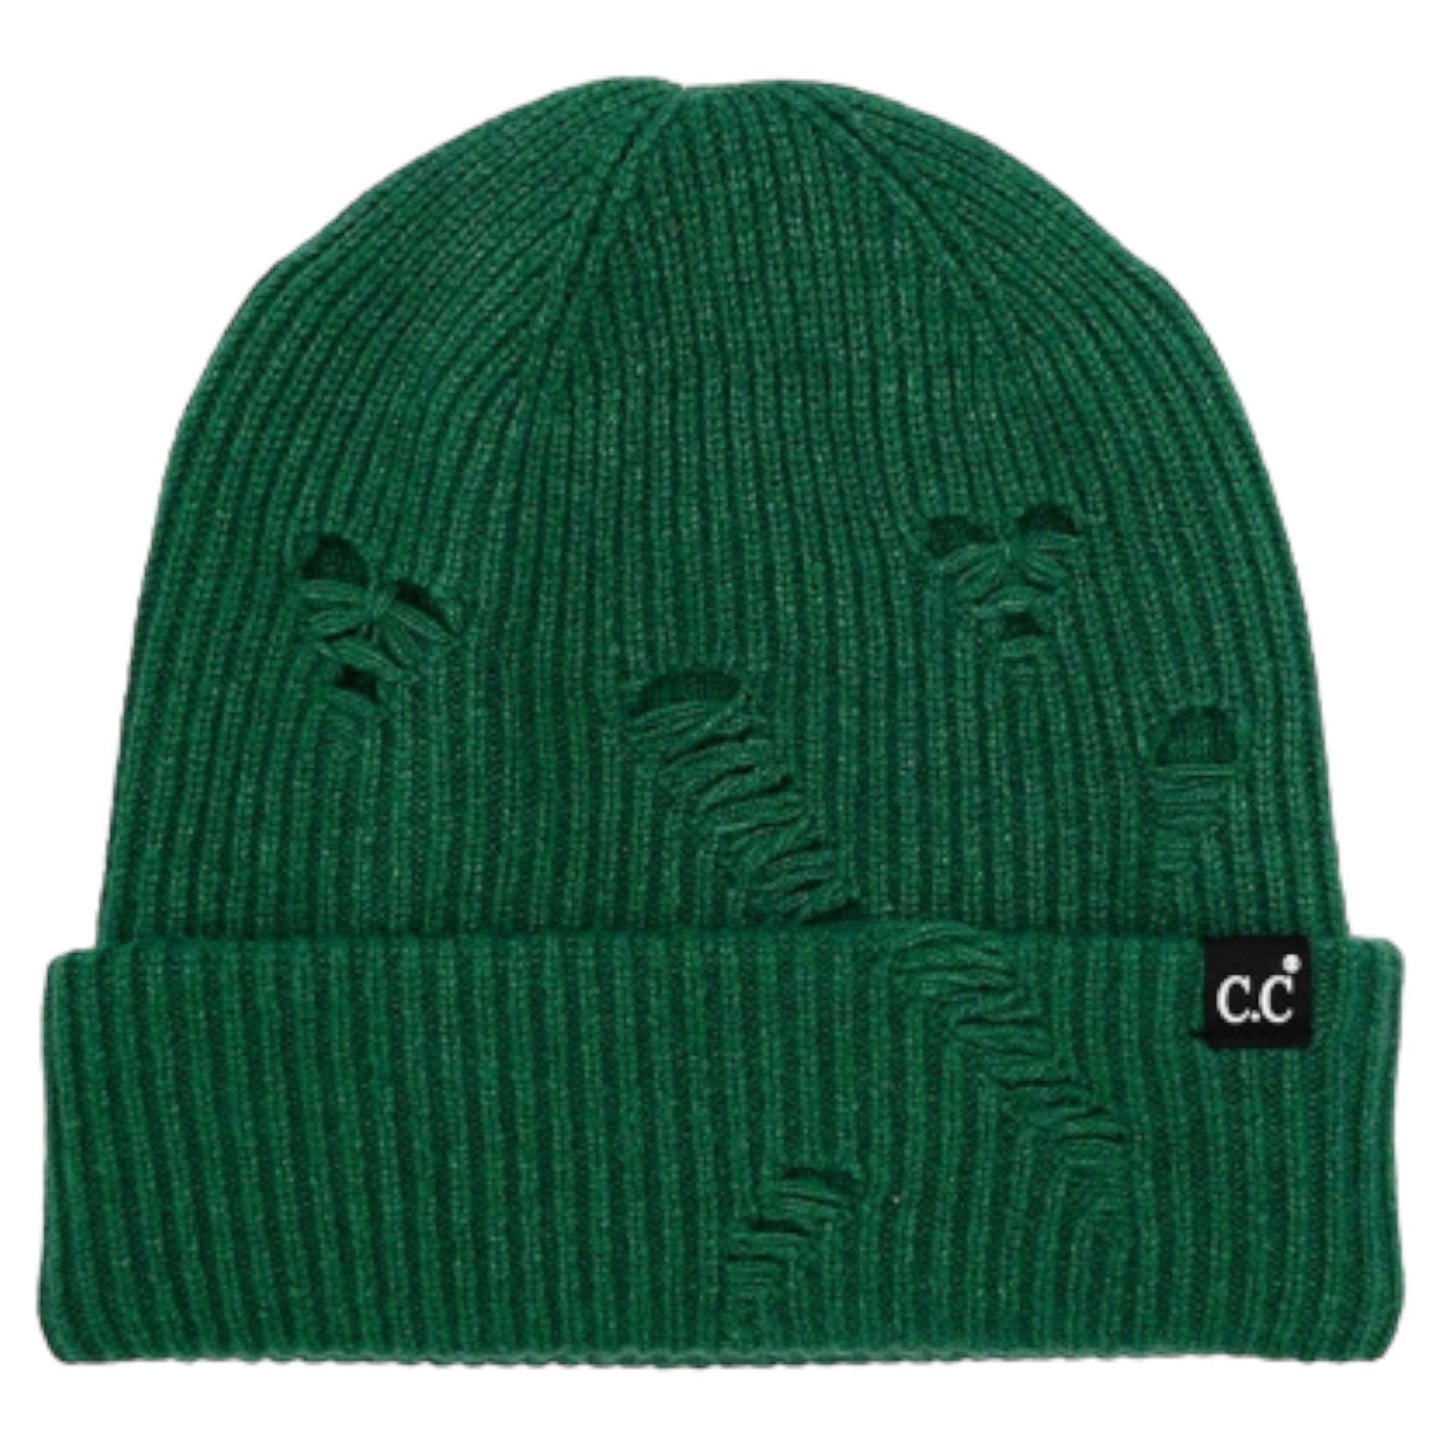 C.C Distressed Solid Cuff Beanie Hat